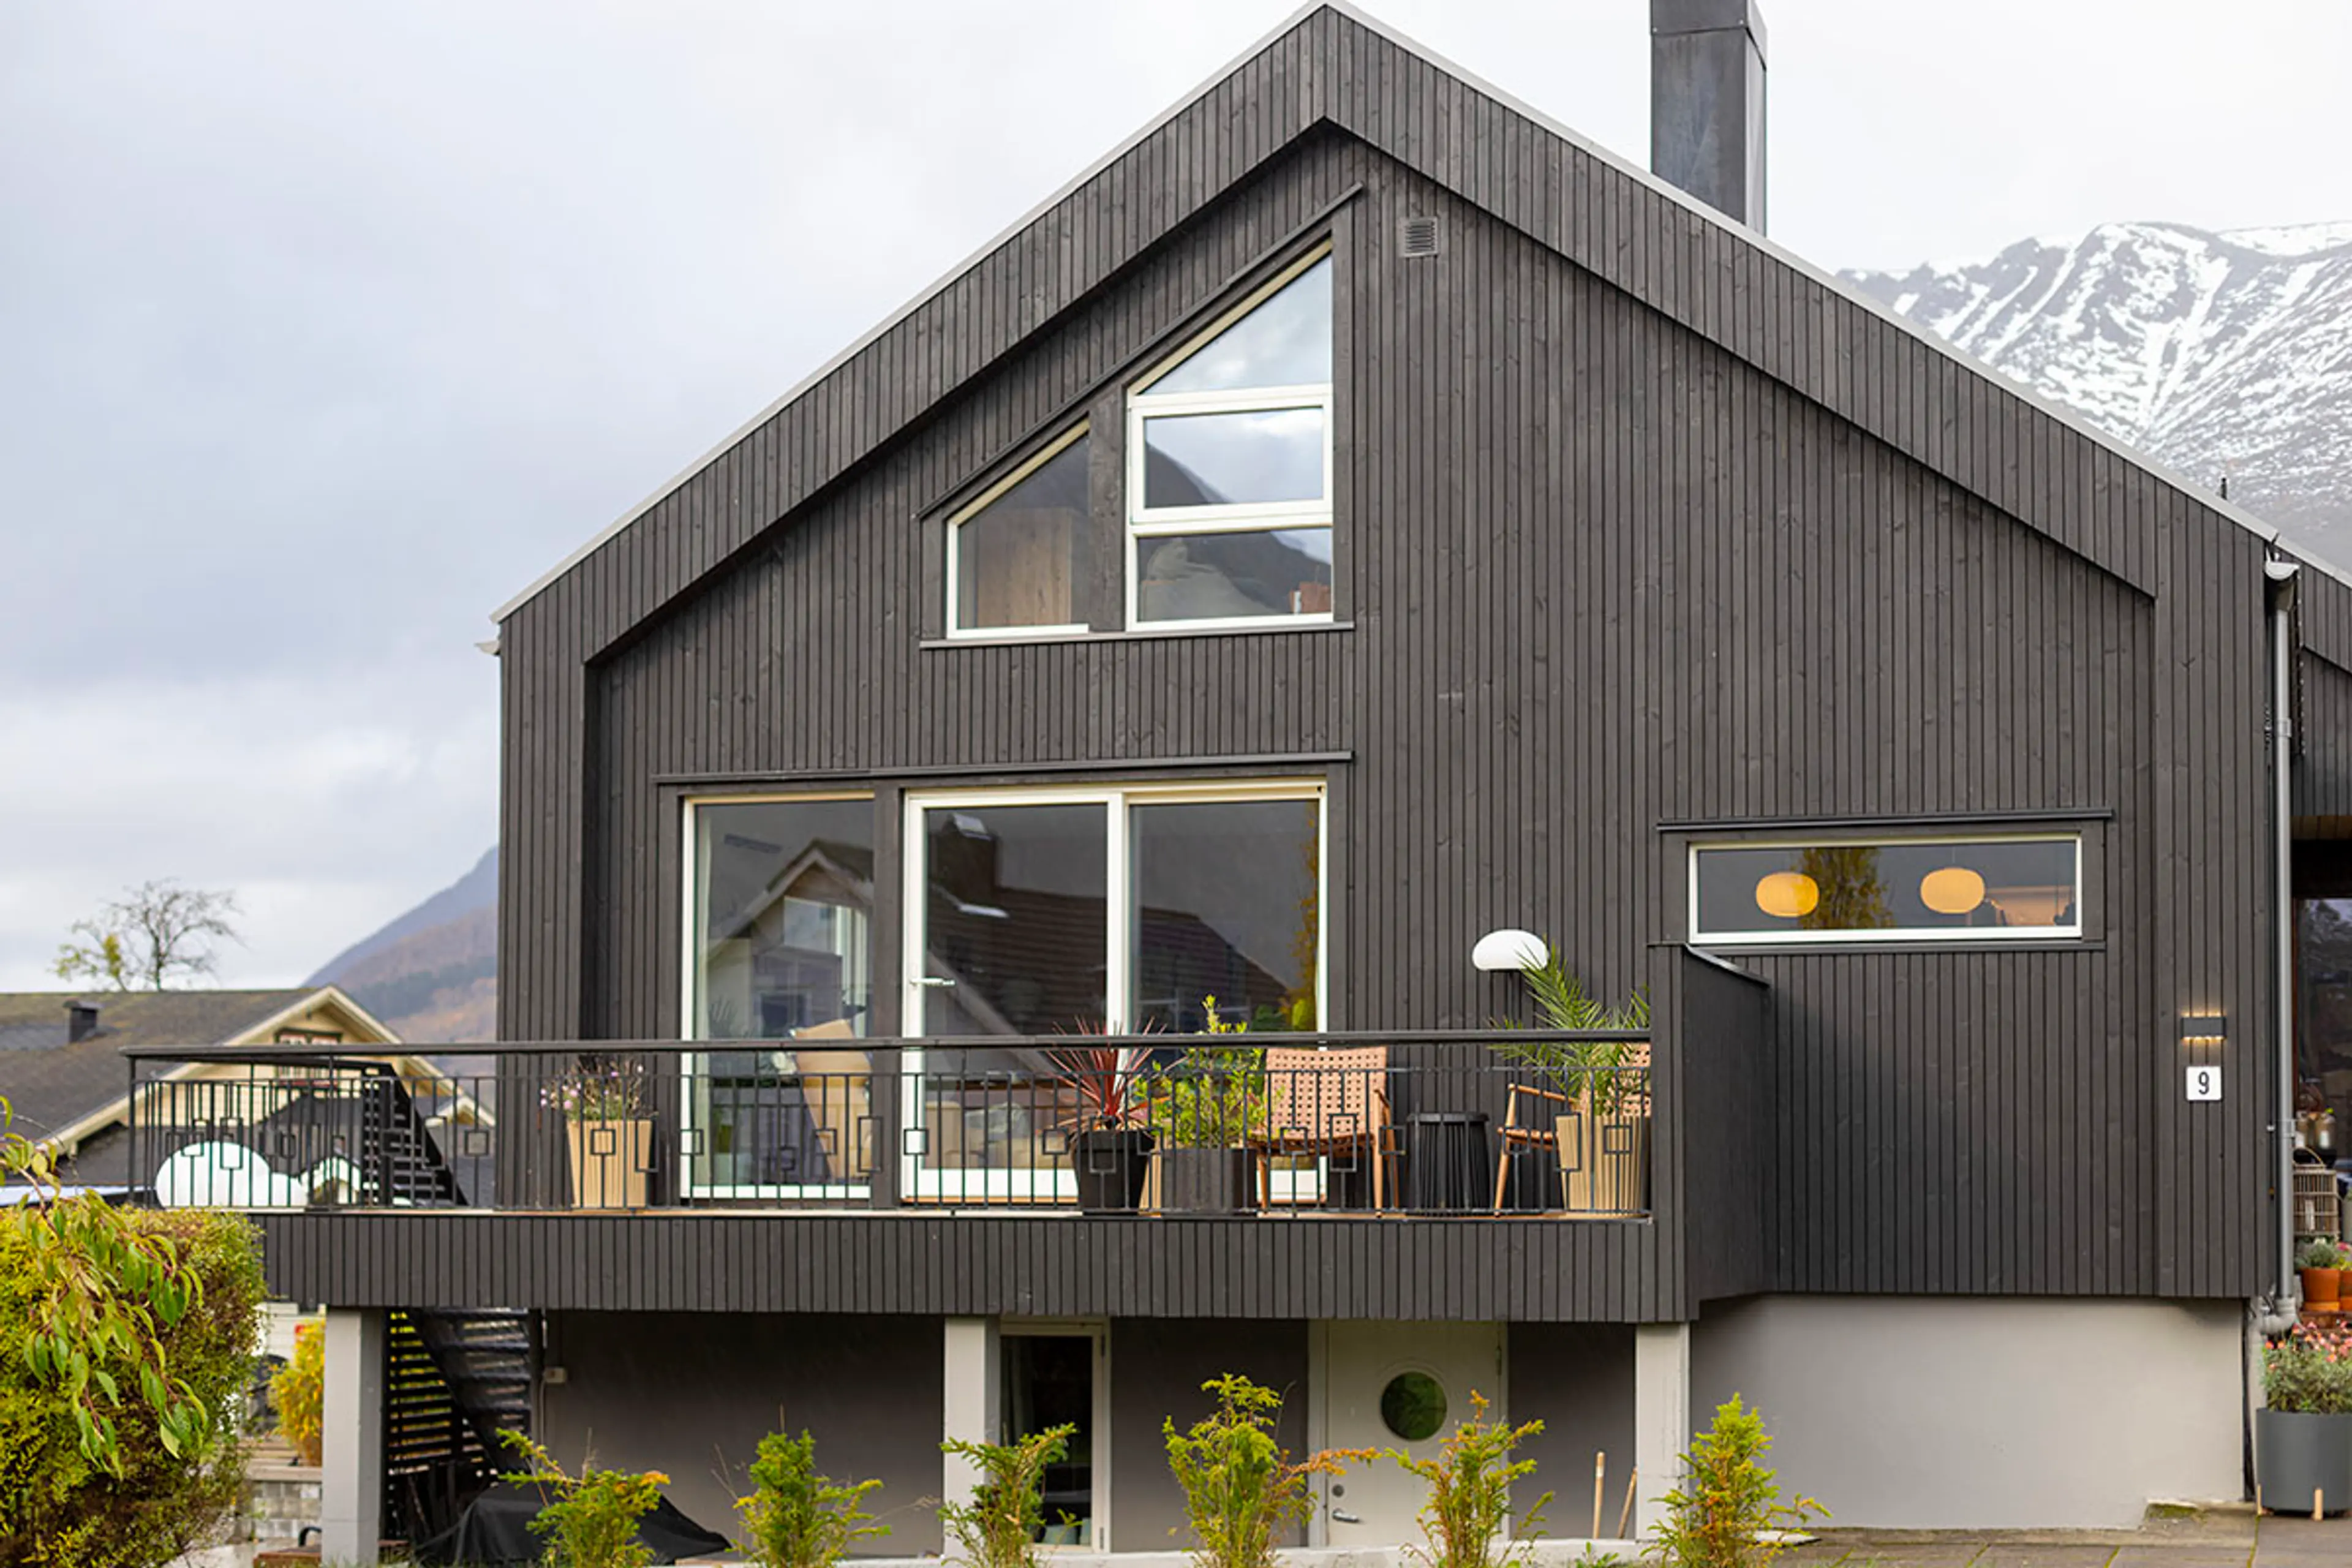 Moderne hus med mange vinkler og Ædel kledning fra Bergene Holm i grått.